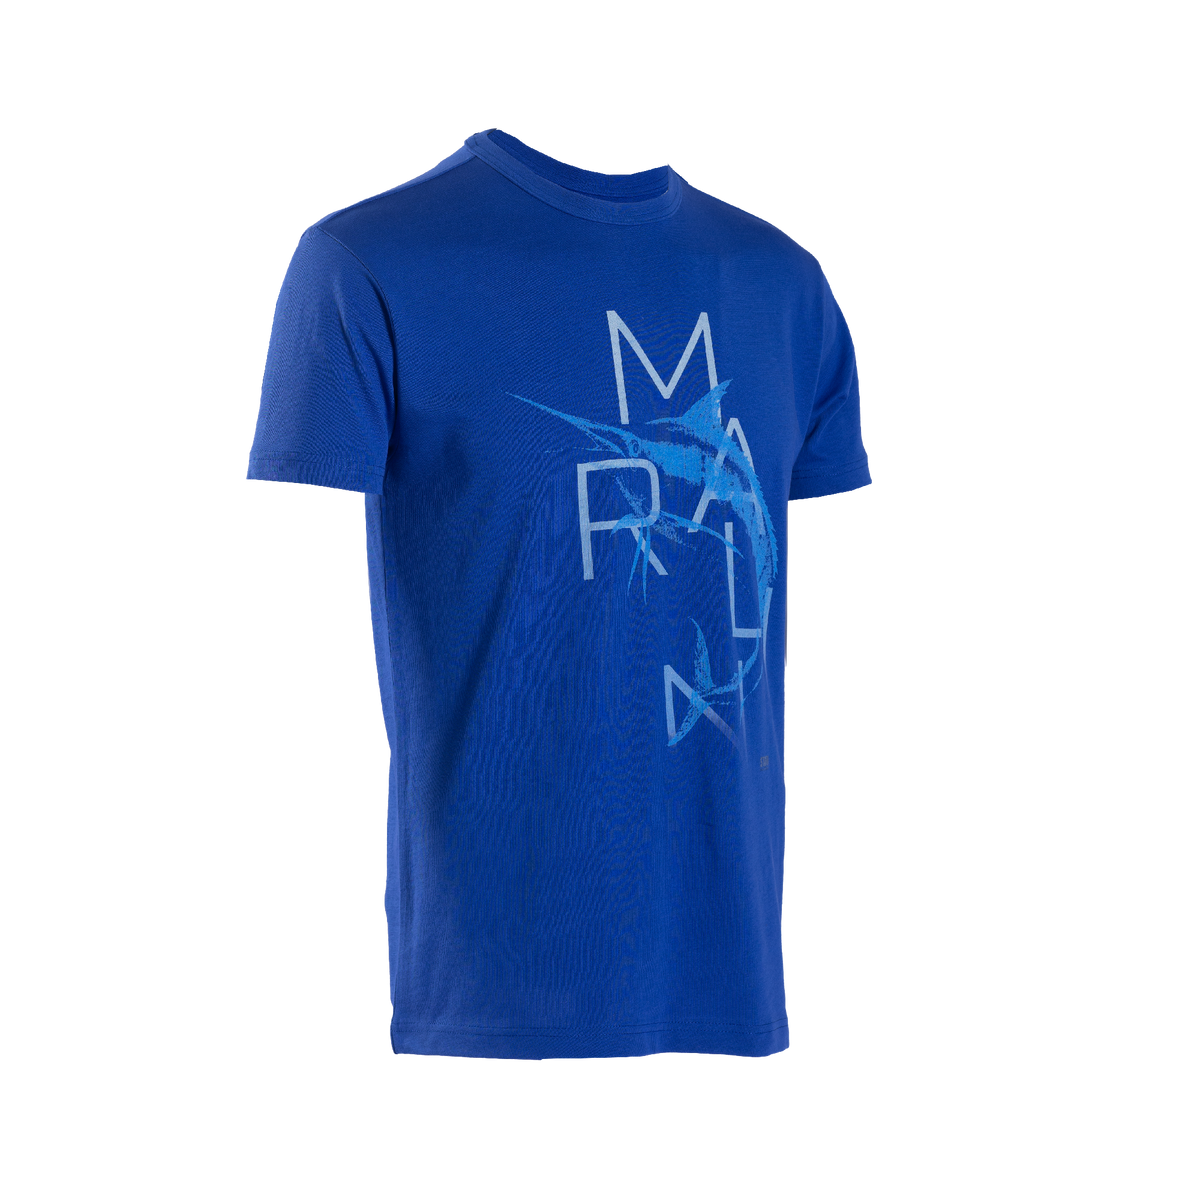 Graphite Short Sleeve Crew Neck T-Shirt Marlin Patterned